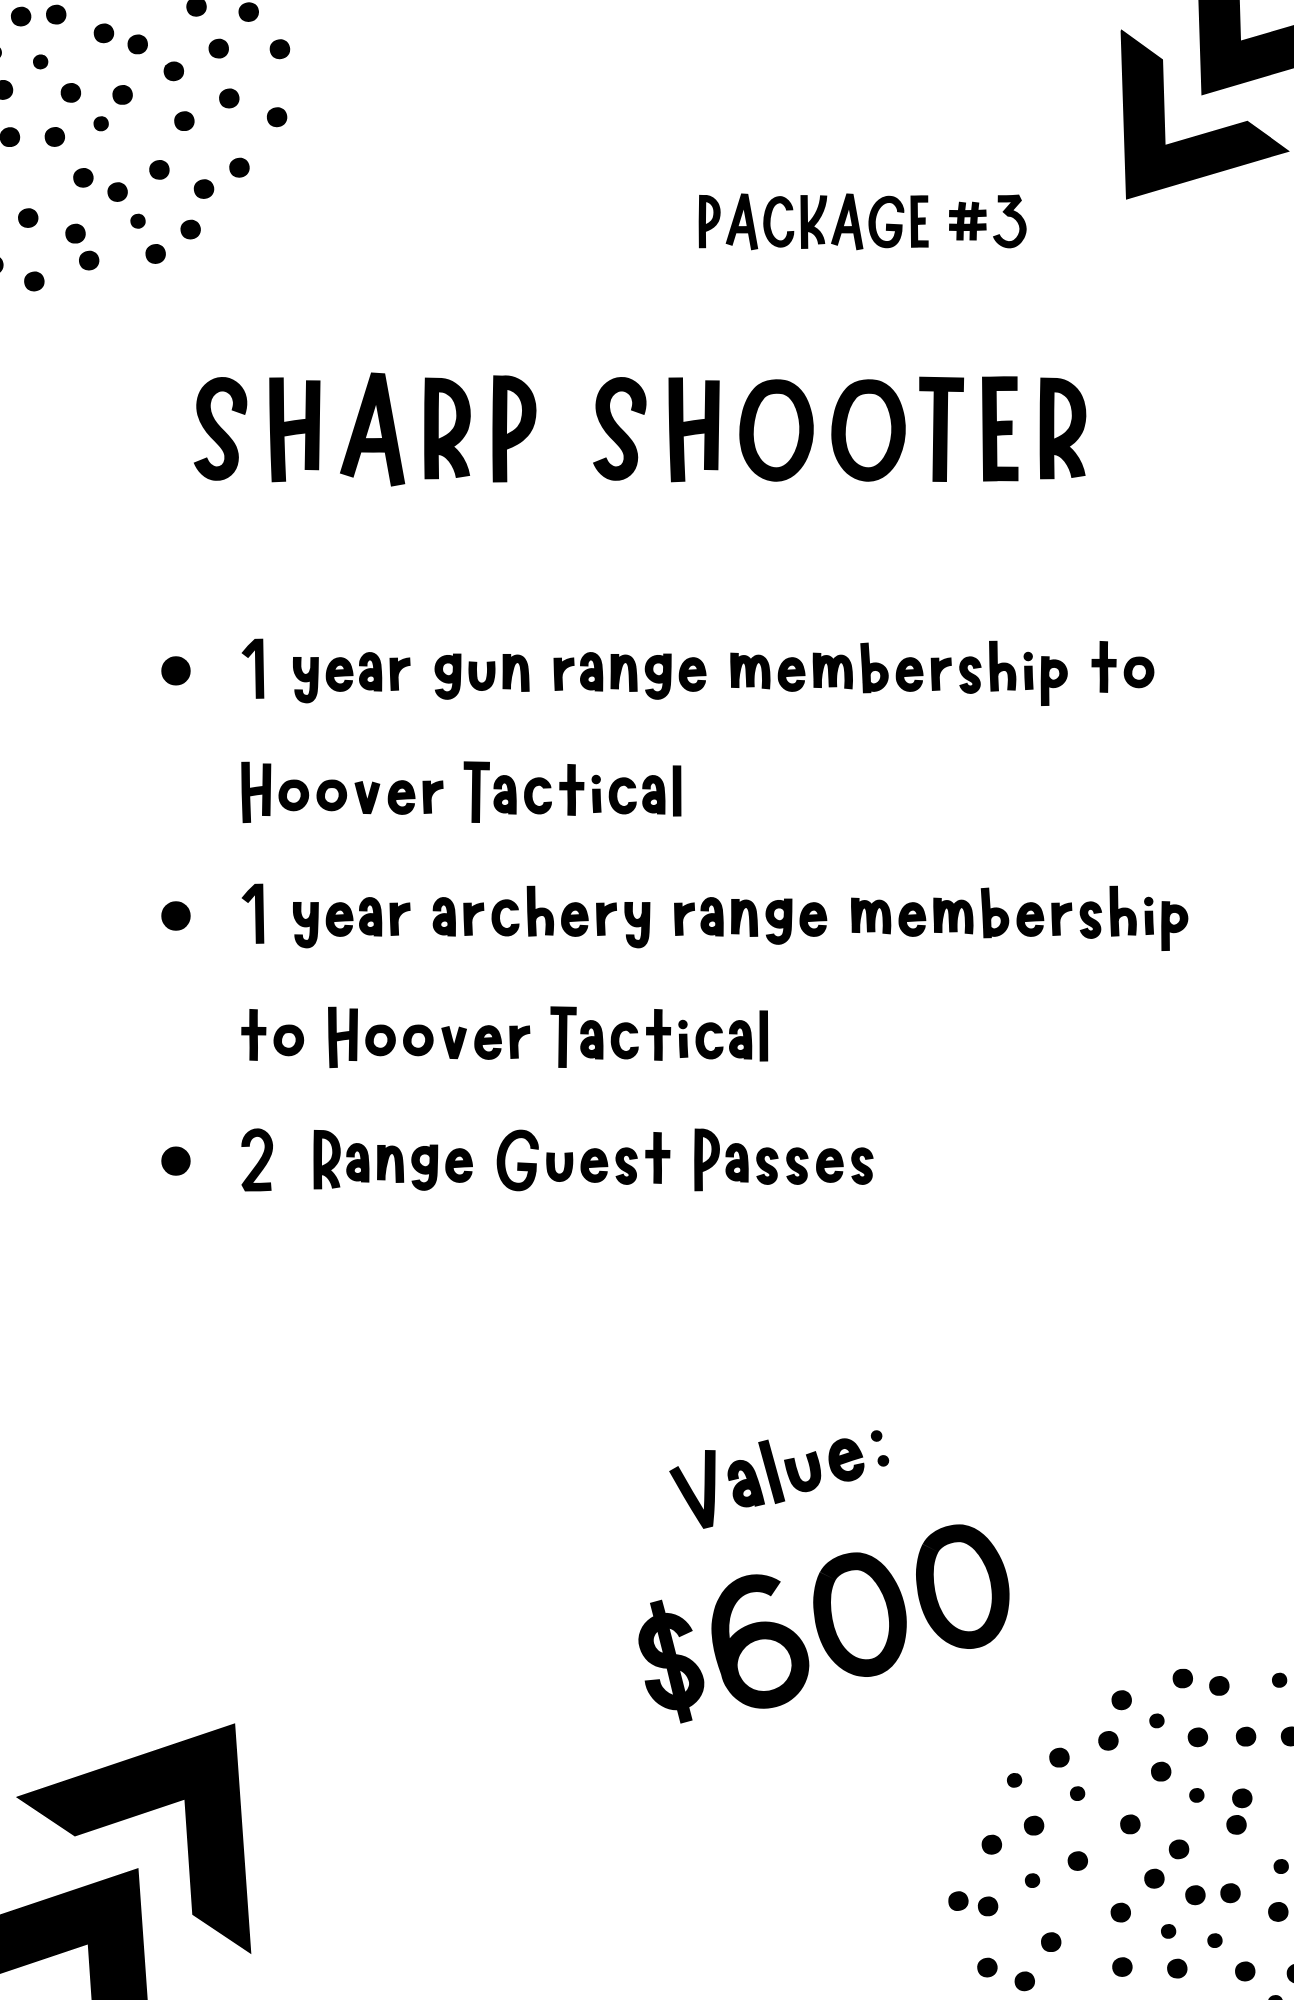 Auction Item # 3: Sharp Shooter